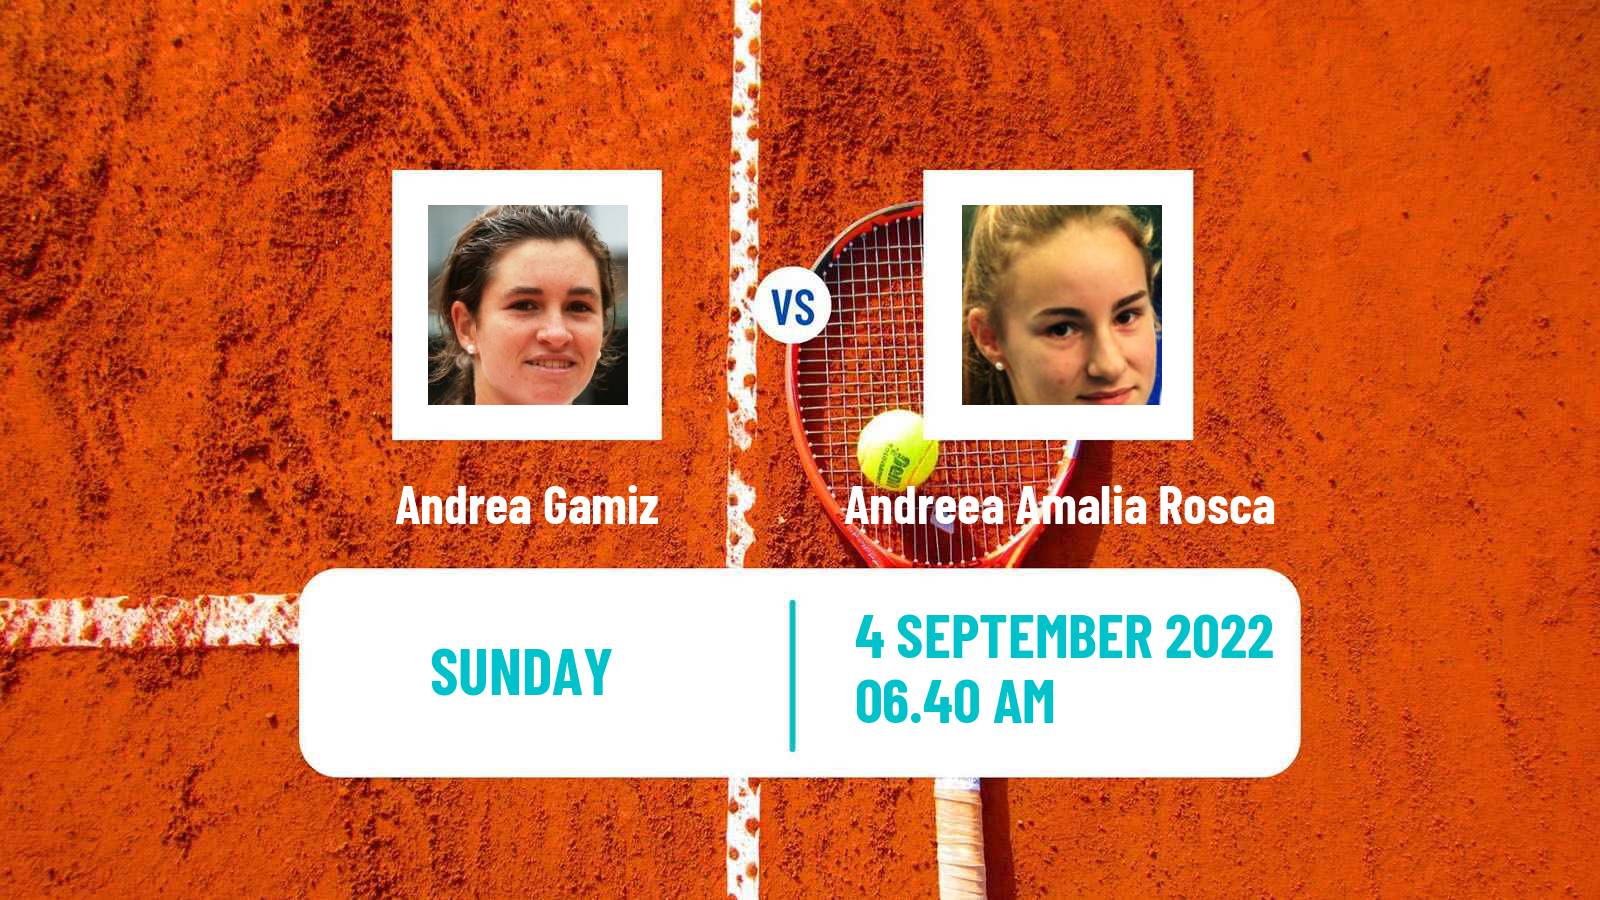 Tennis ATP Challenger Andrea Gamiz - Andreea Amalia Rosca